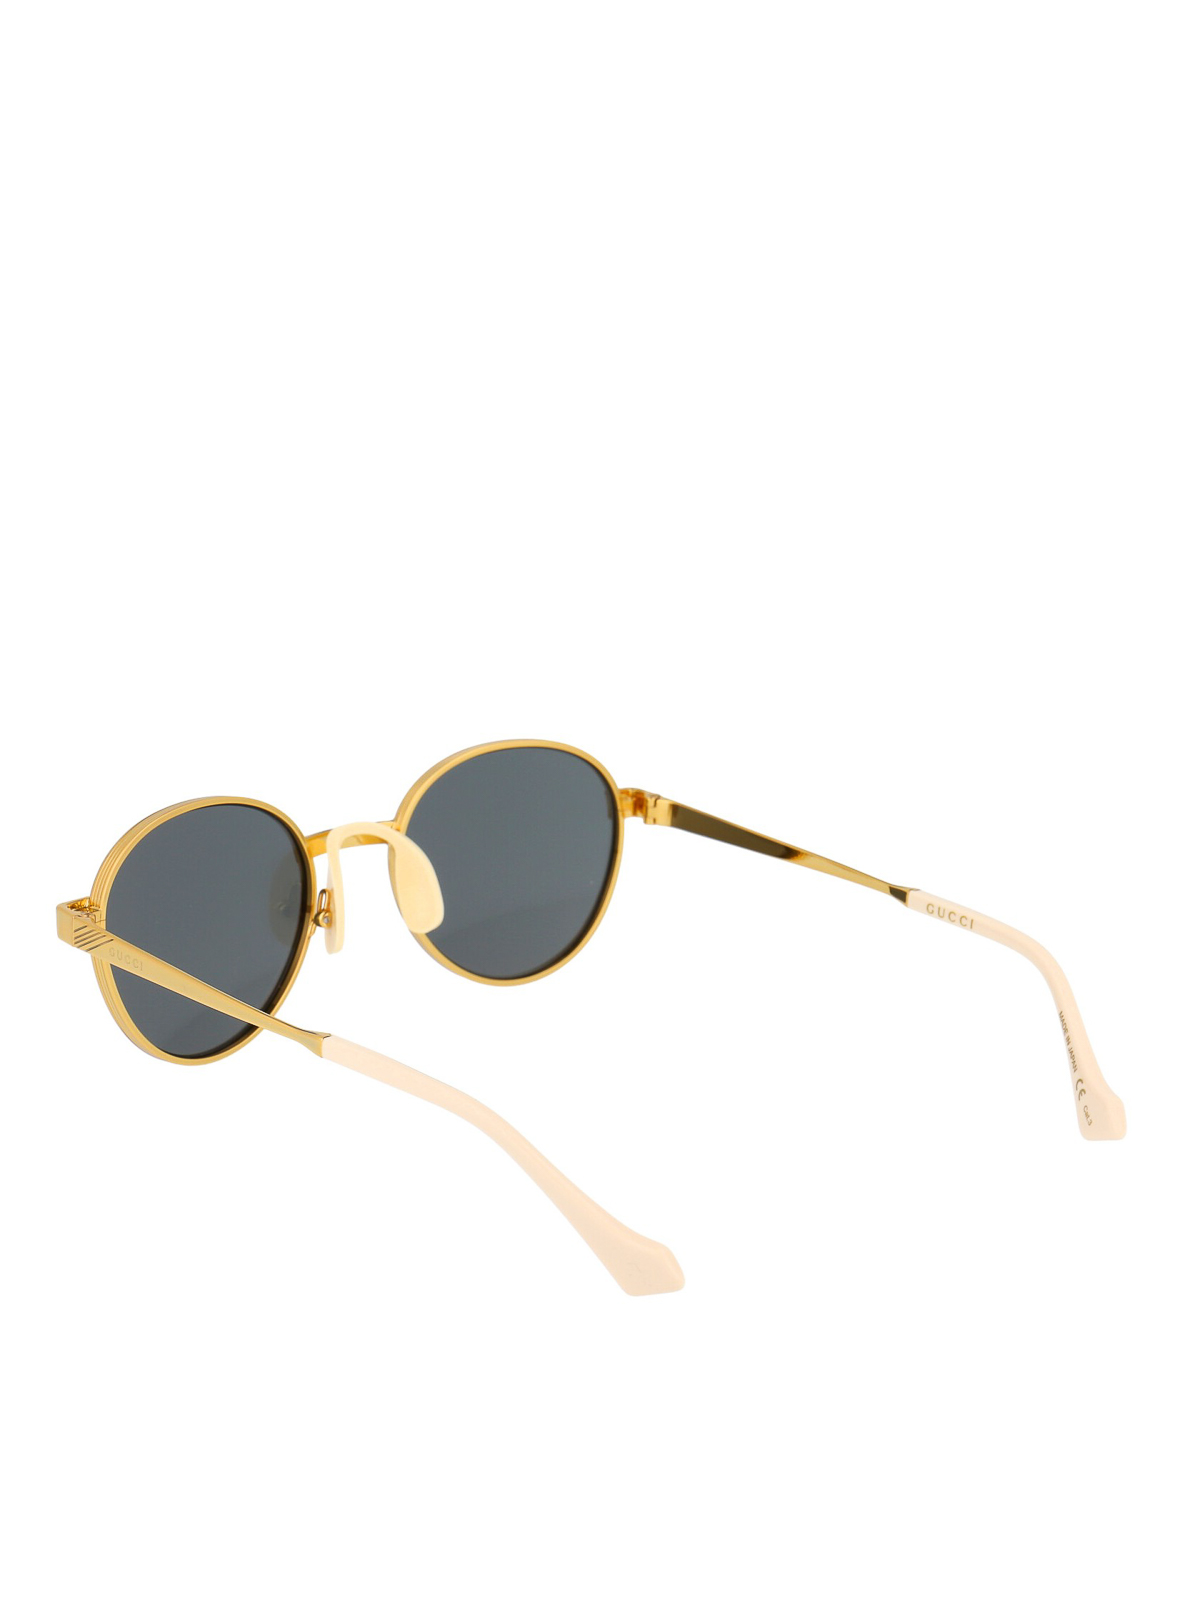 Gucci - Round metal sunglasses 